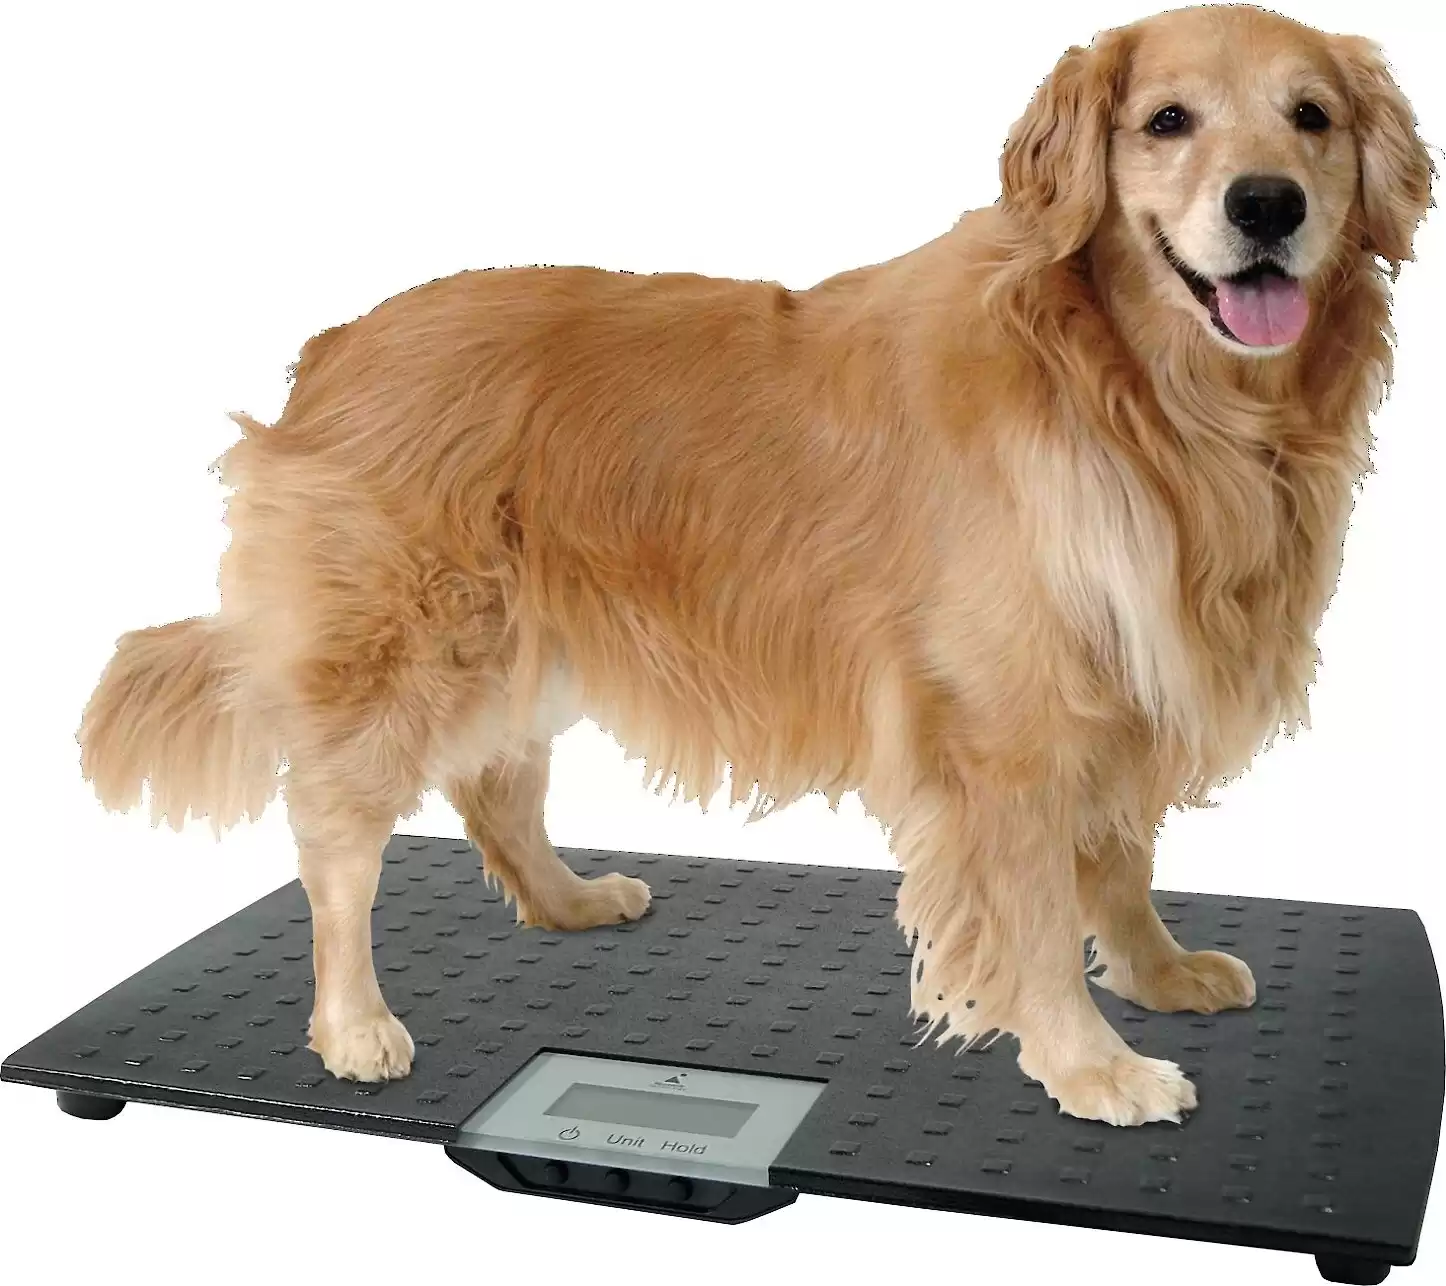 W.C. Redmon Precision Digital Pet Scales